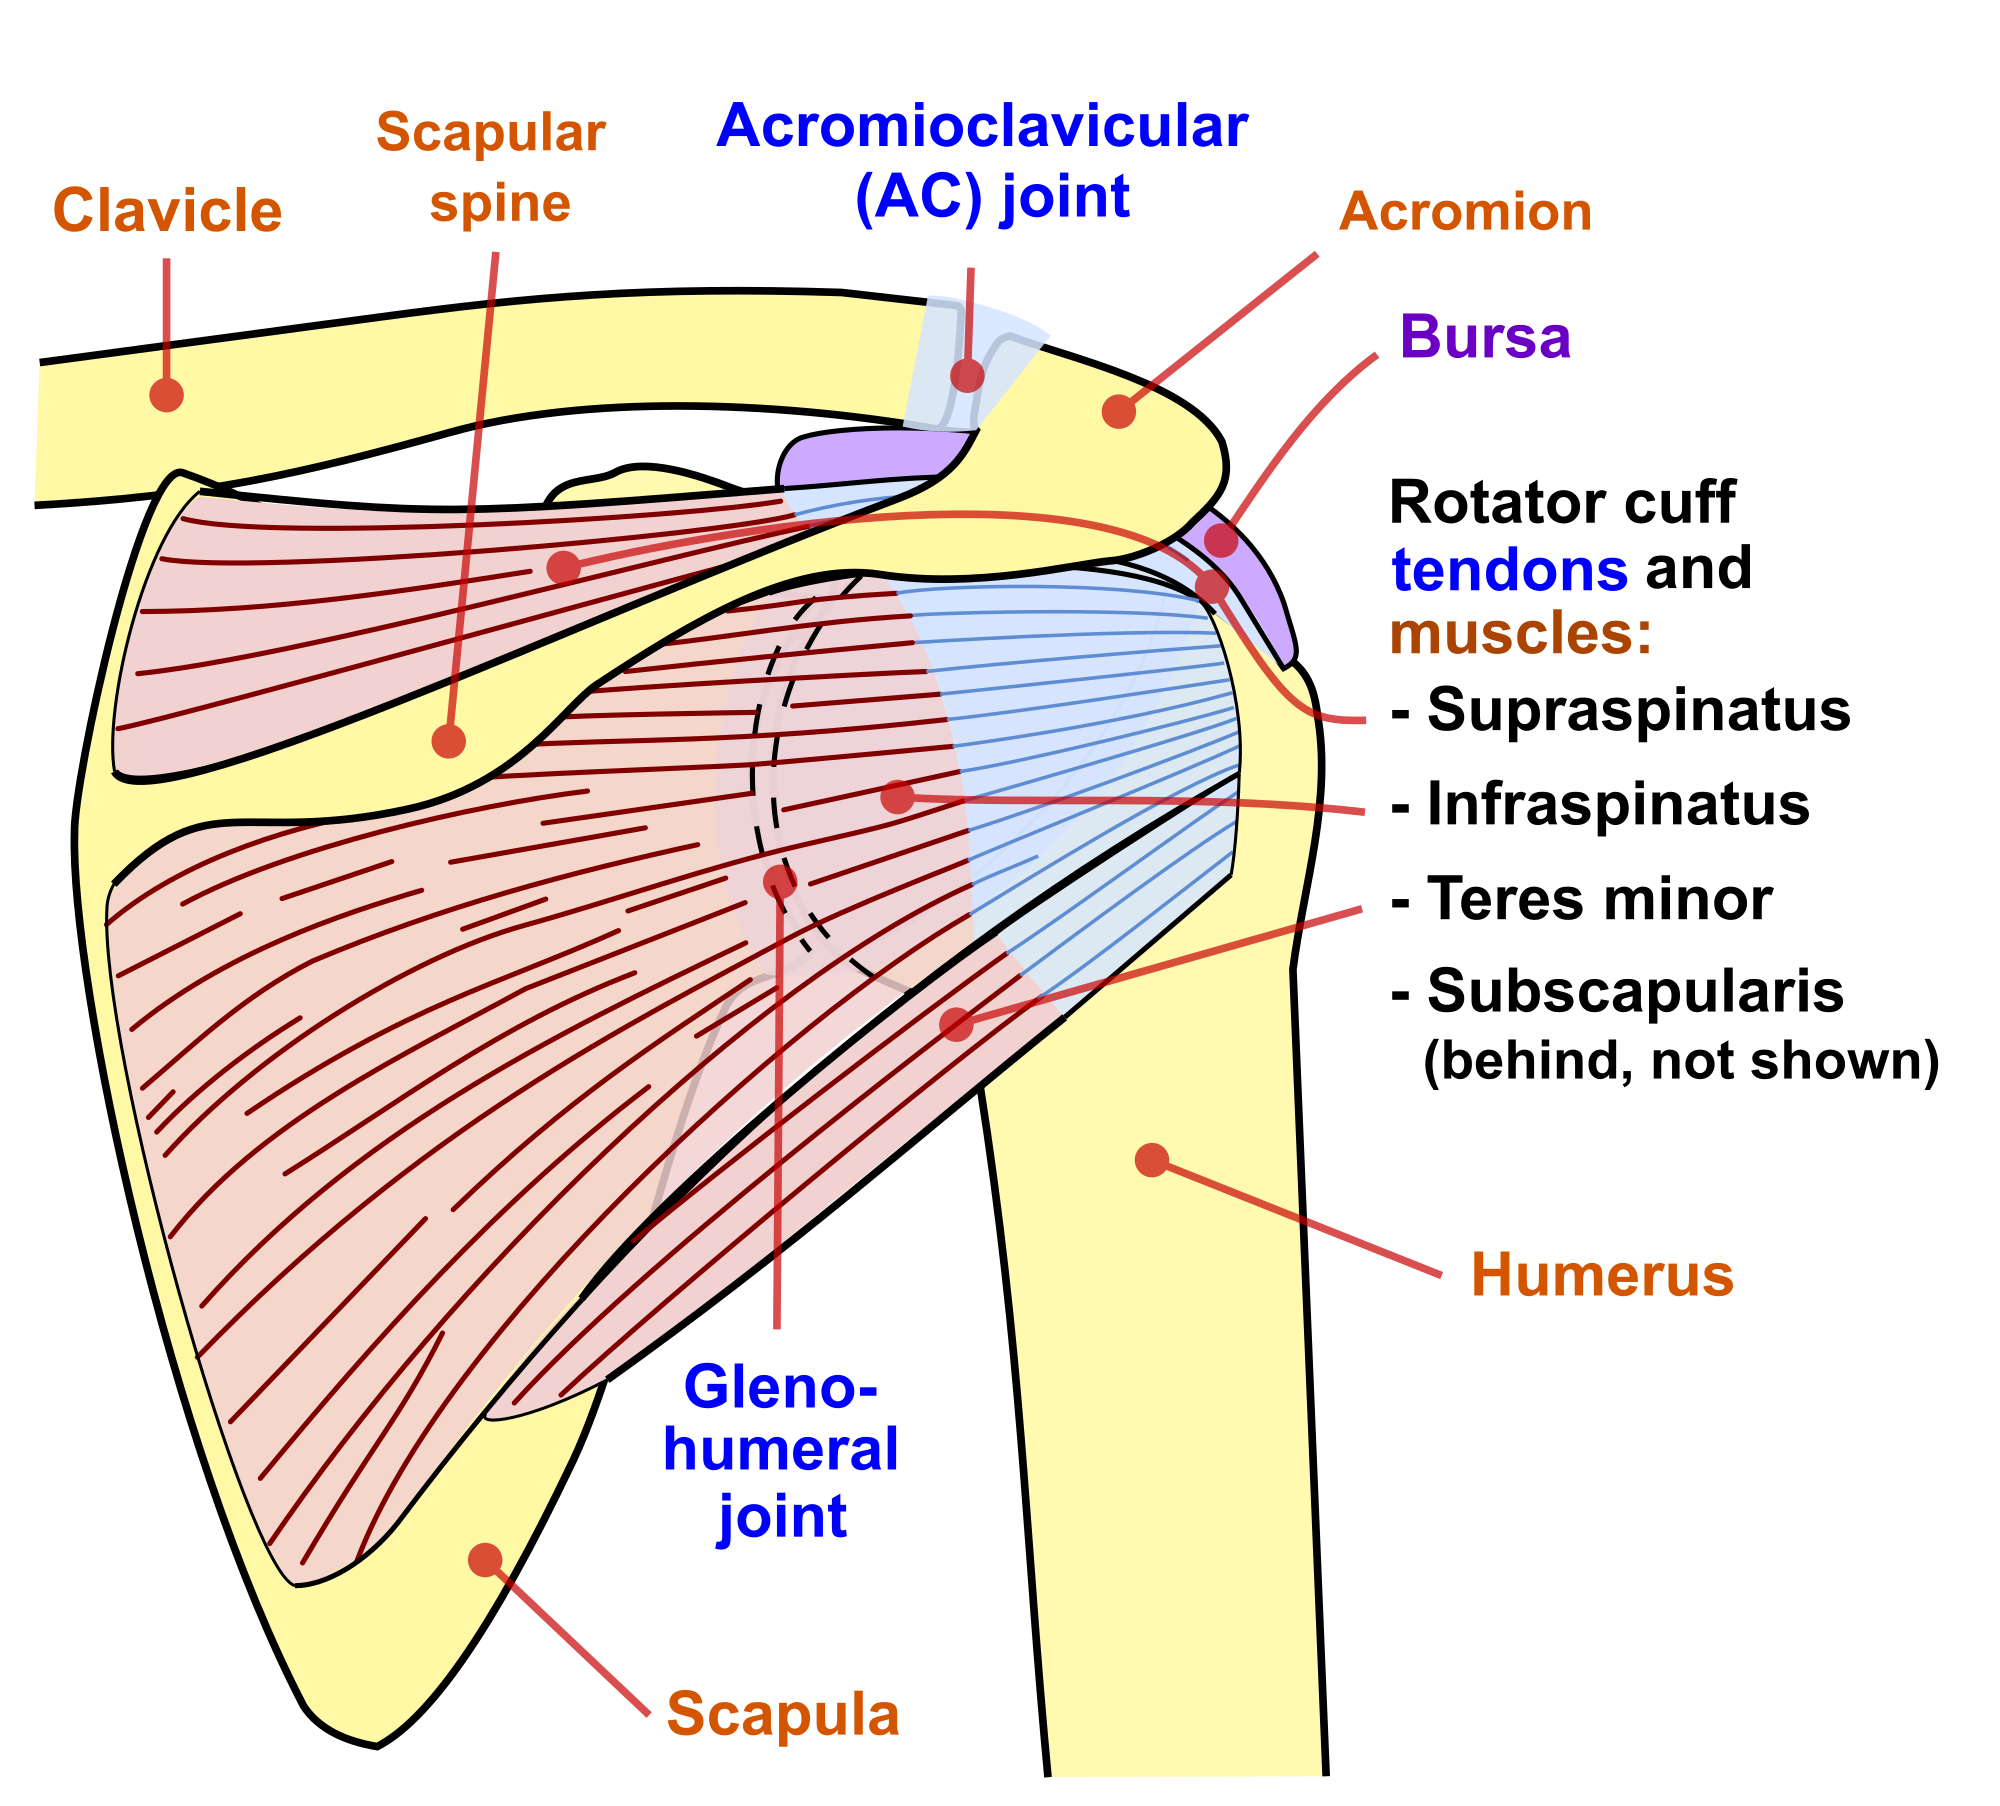 Front Shoulder Muscles Diagram Muscles Diagrams Diagram Of Muscles